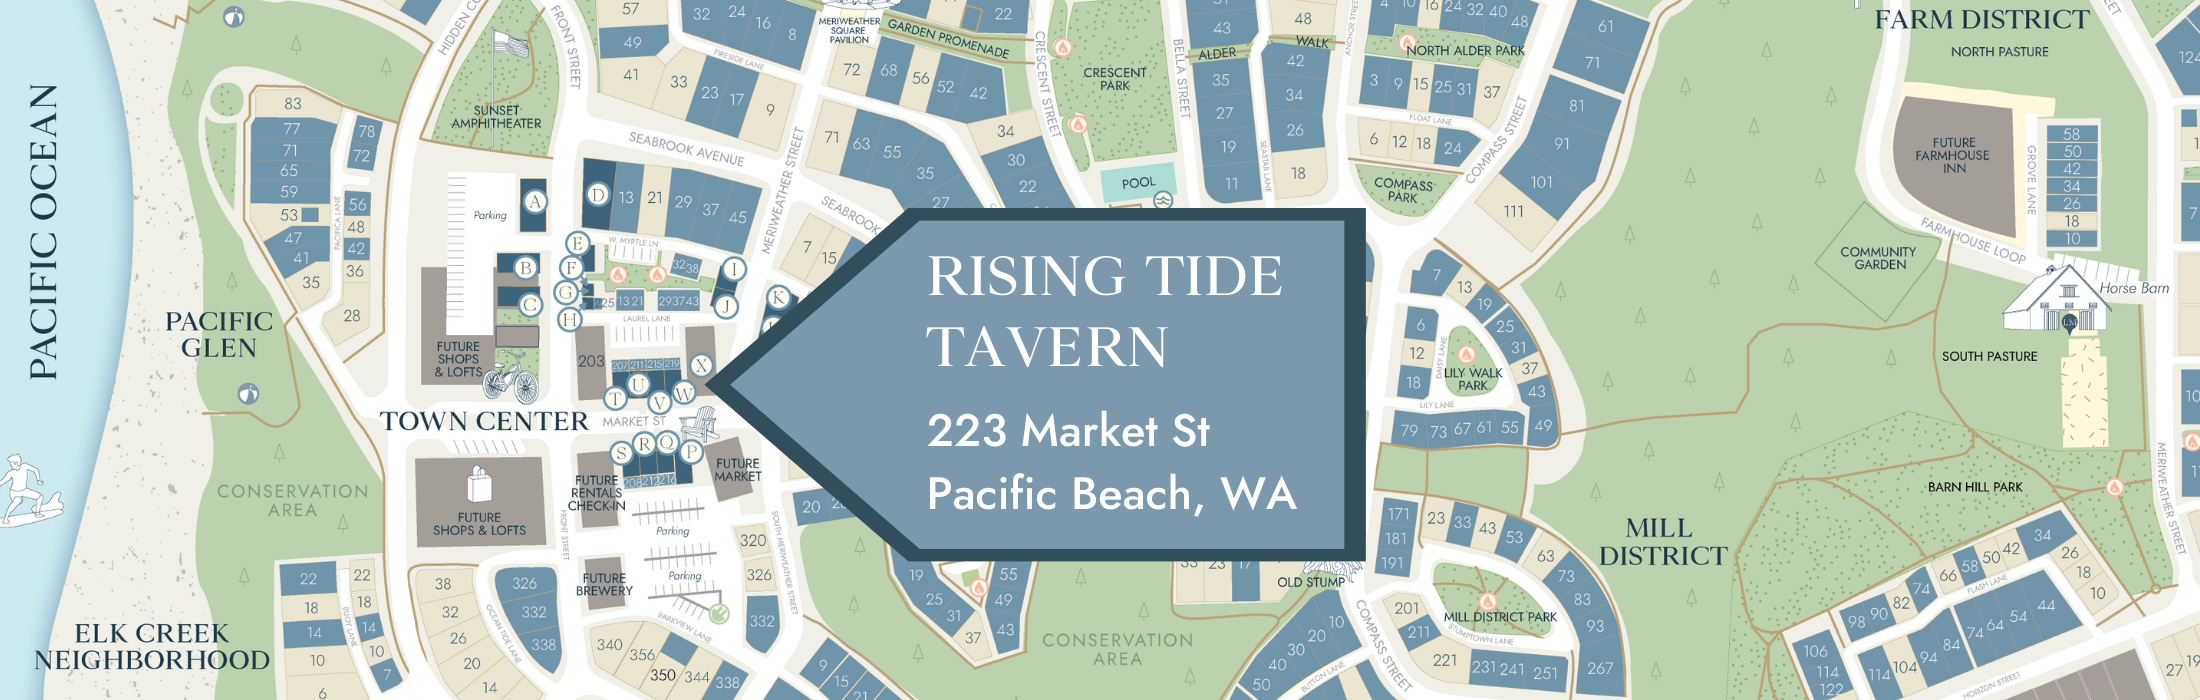 Rising Tide Tavern Map Location